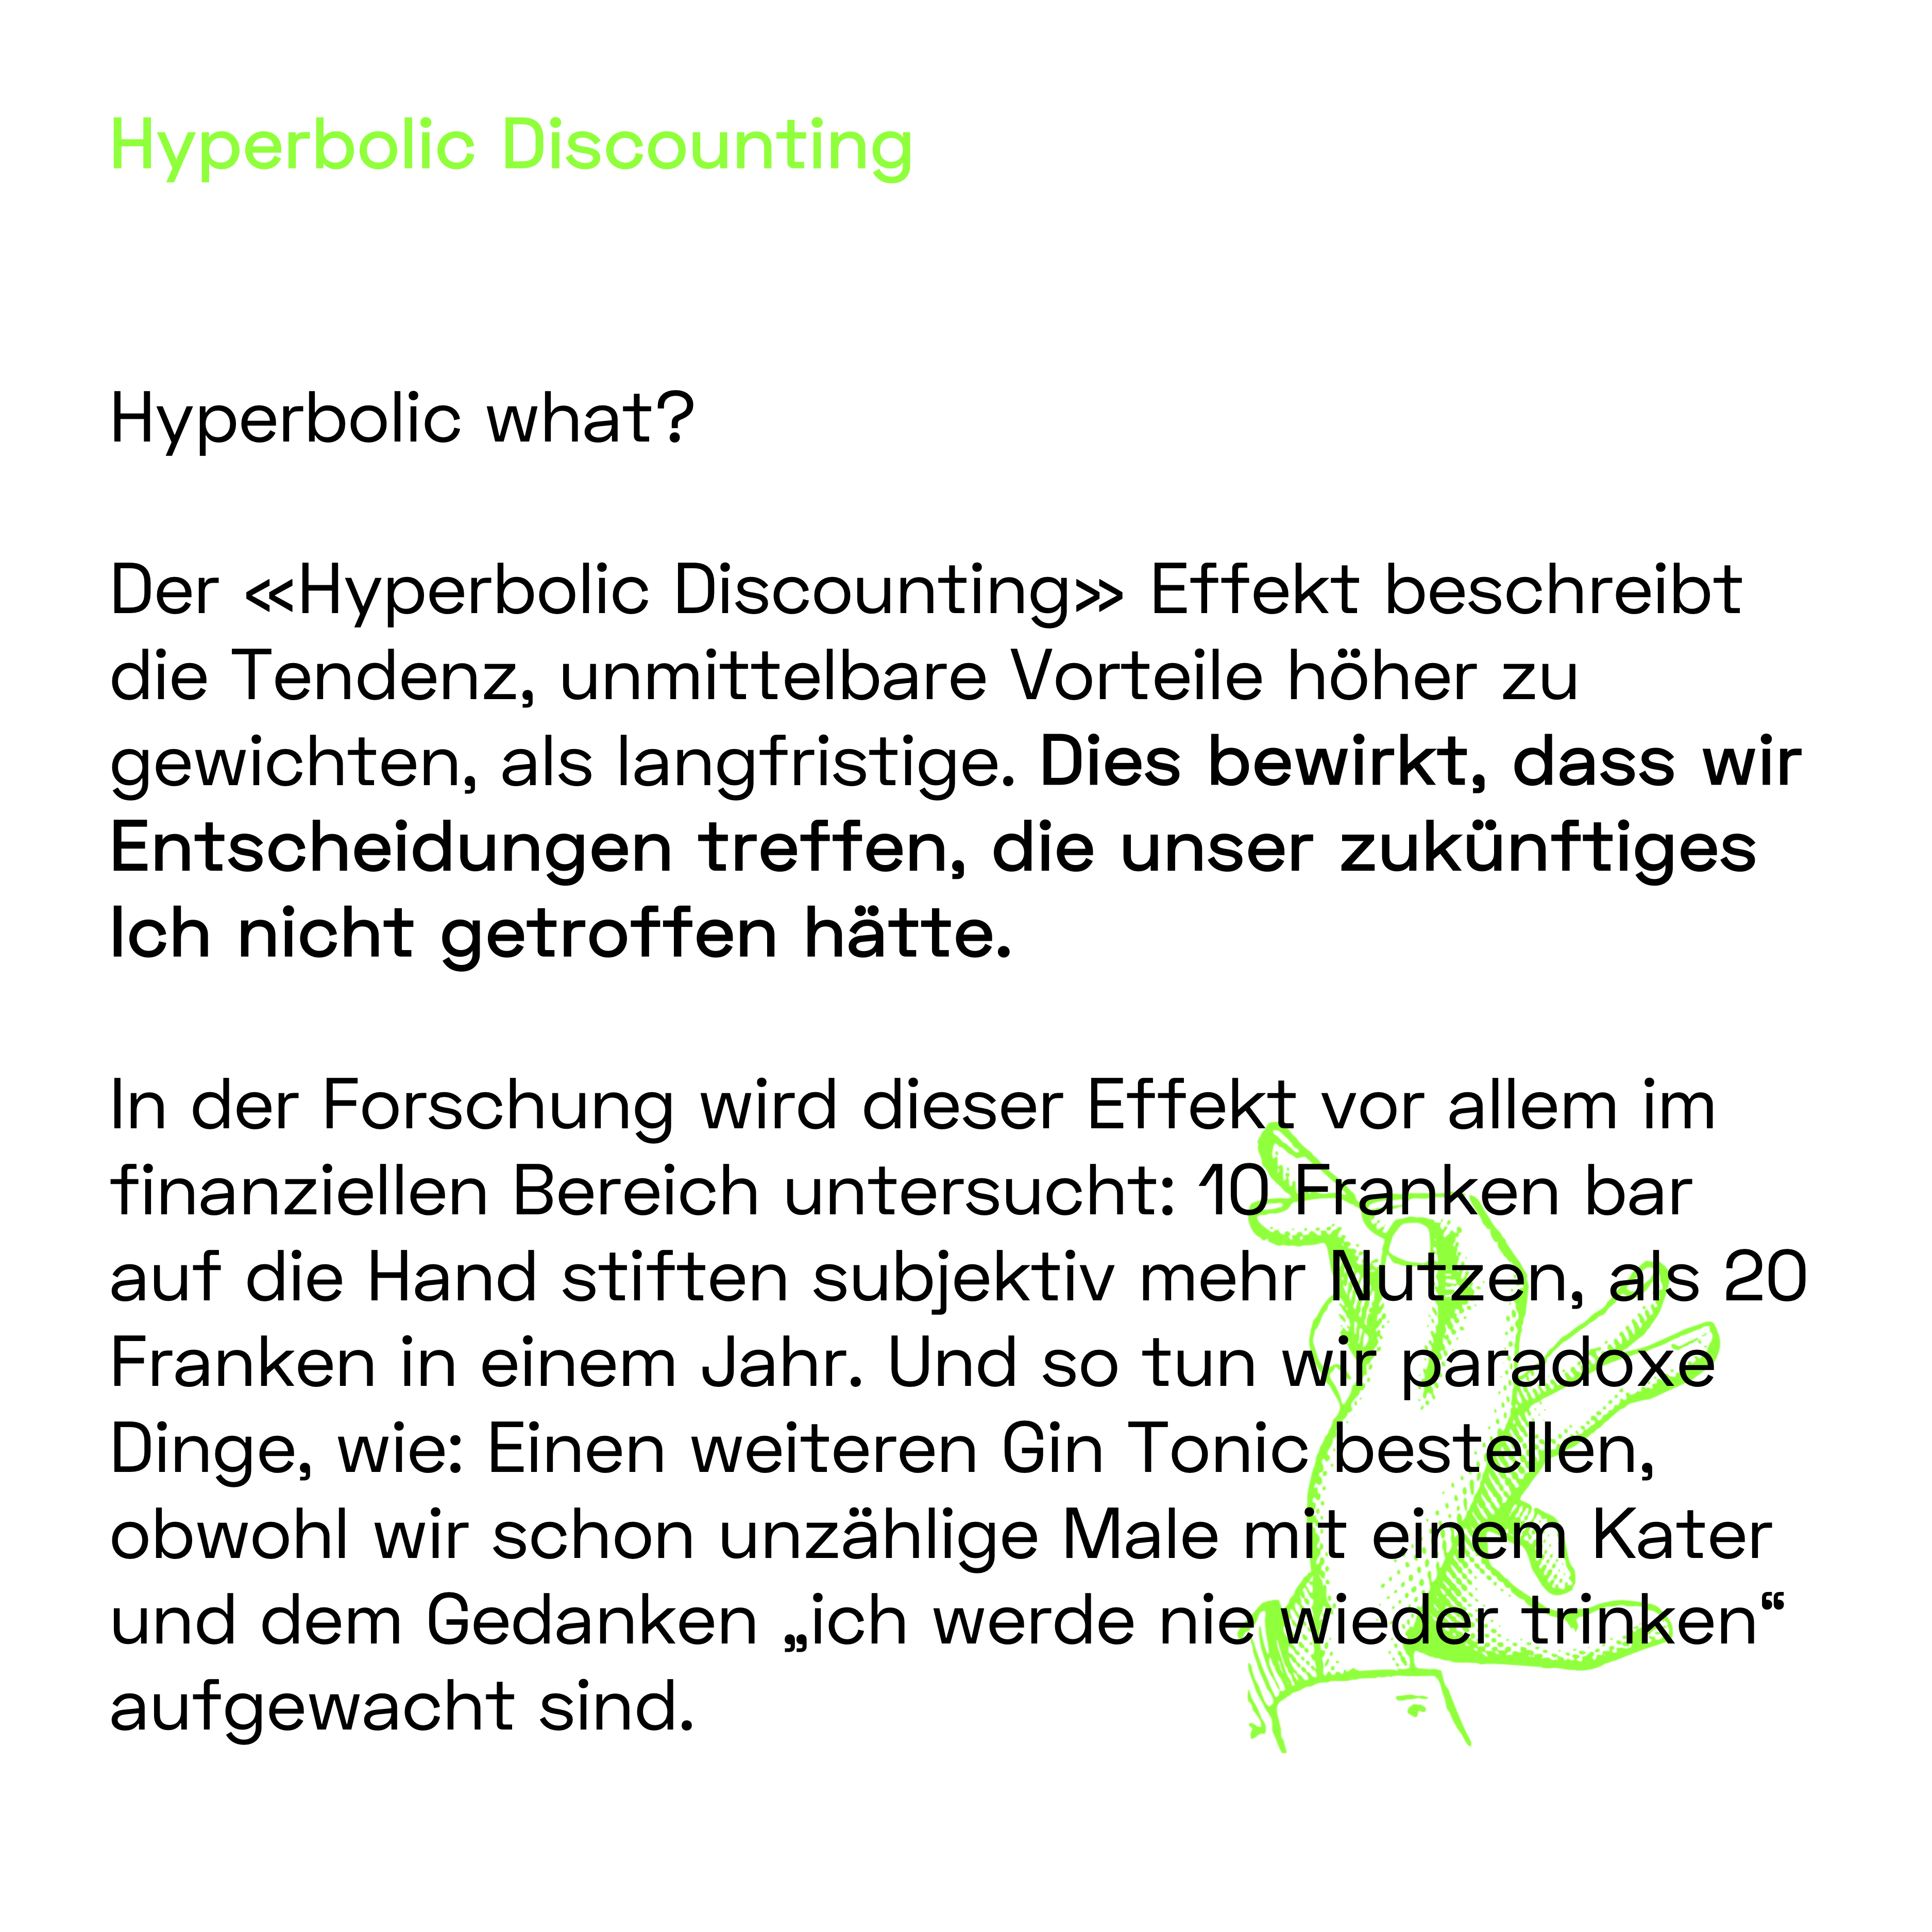 idasi_hyperbolic-discounting_4